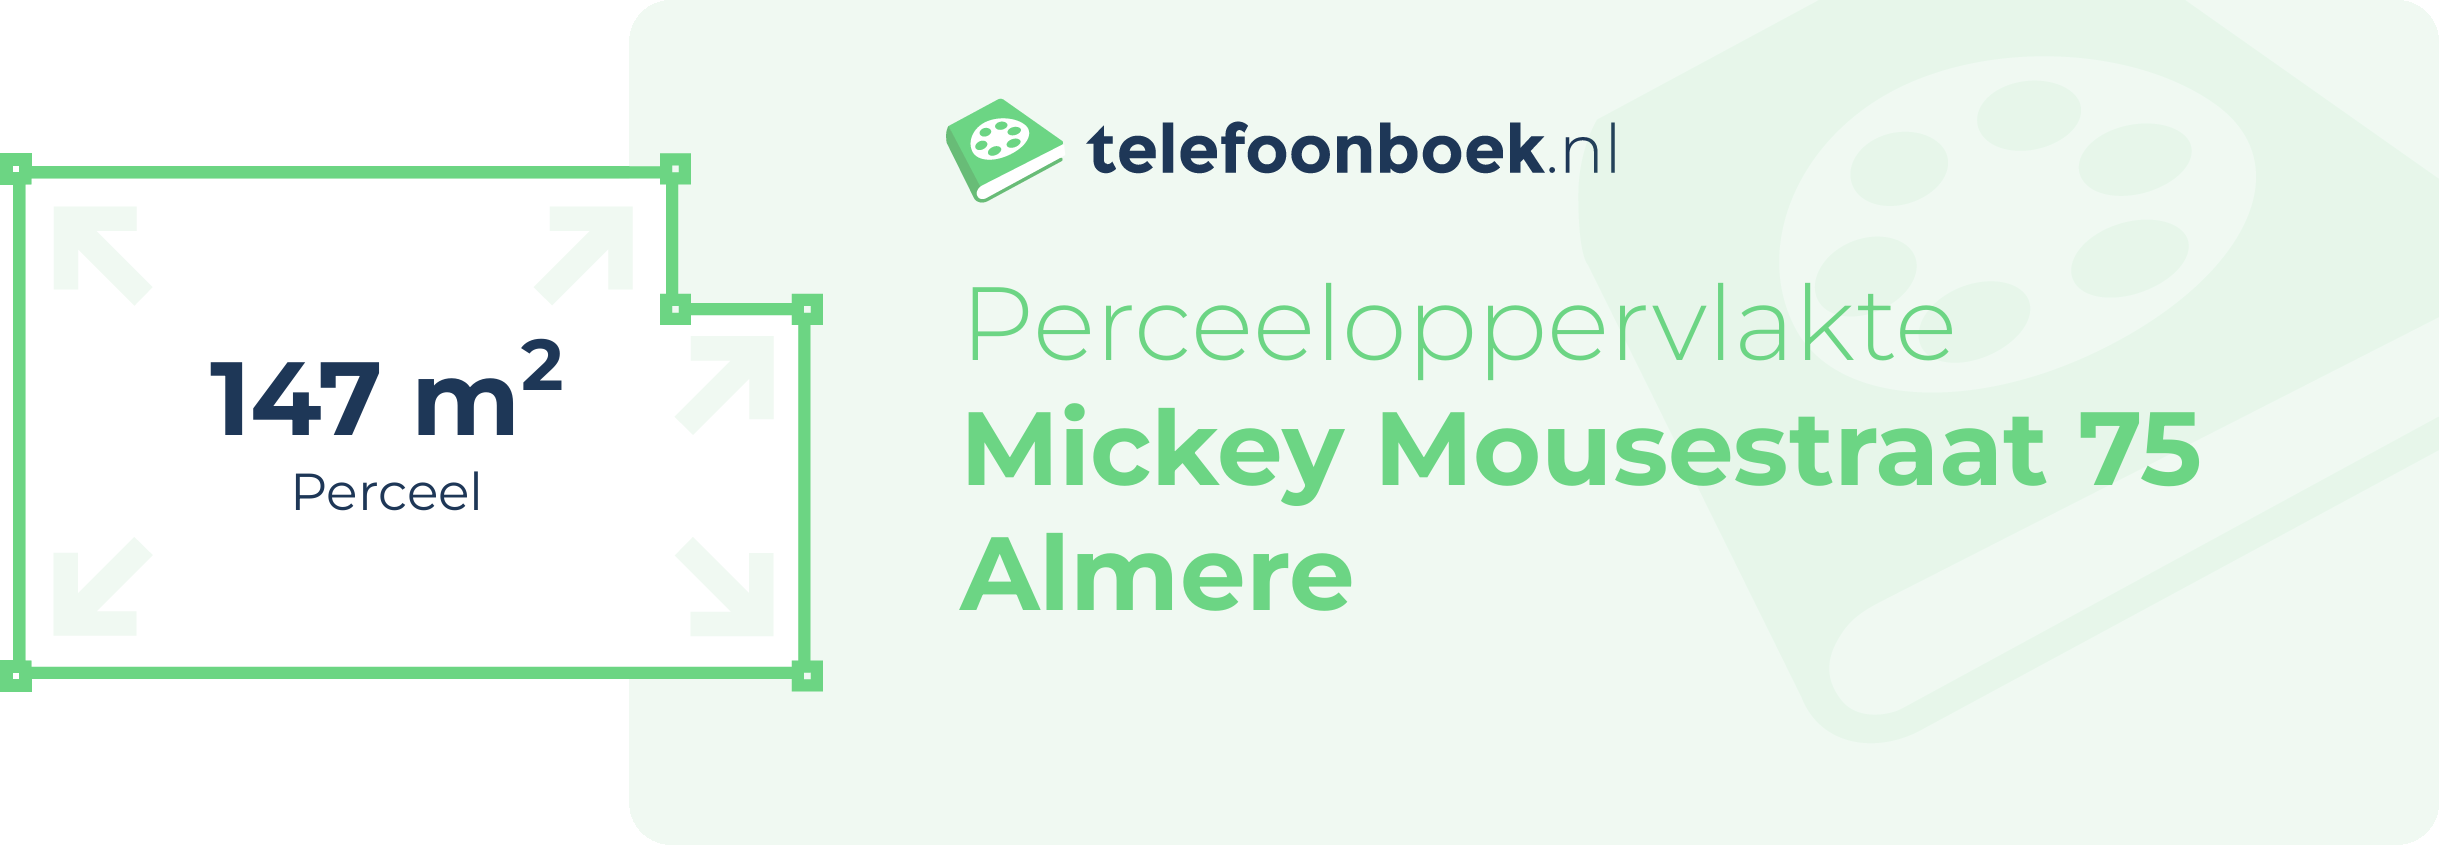 Perceeloppervlakte Mickey Mousestraat 75 Almere